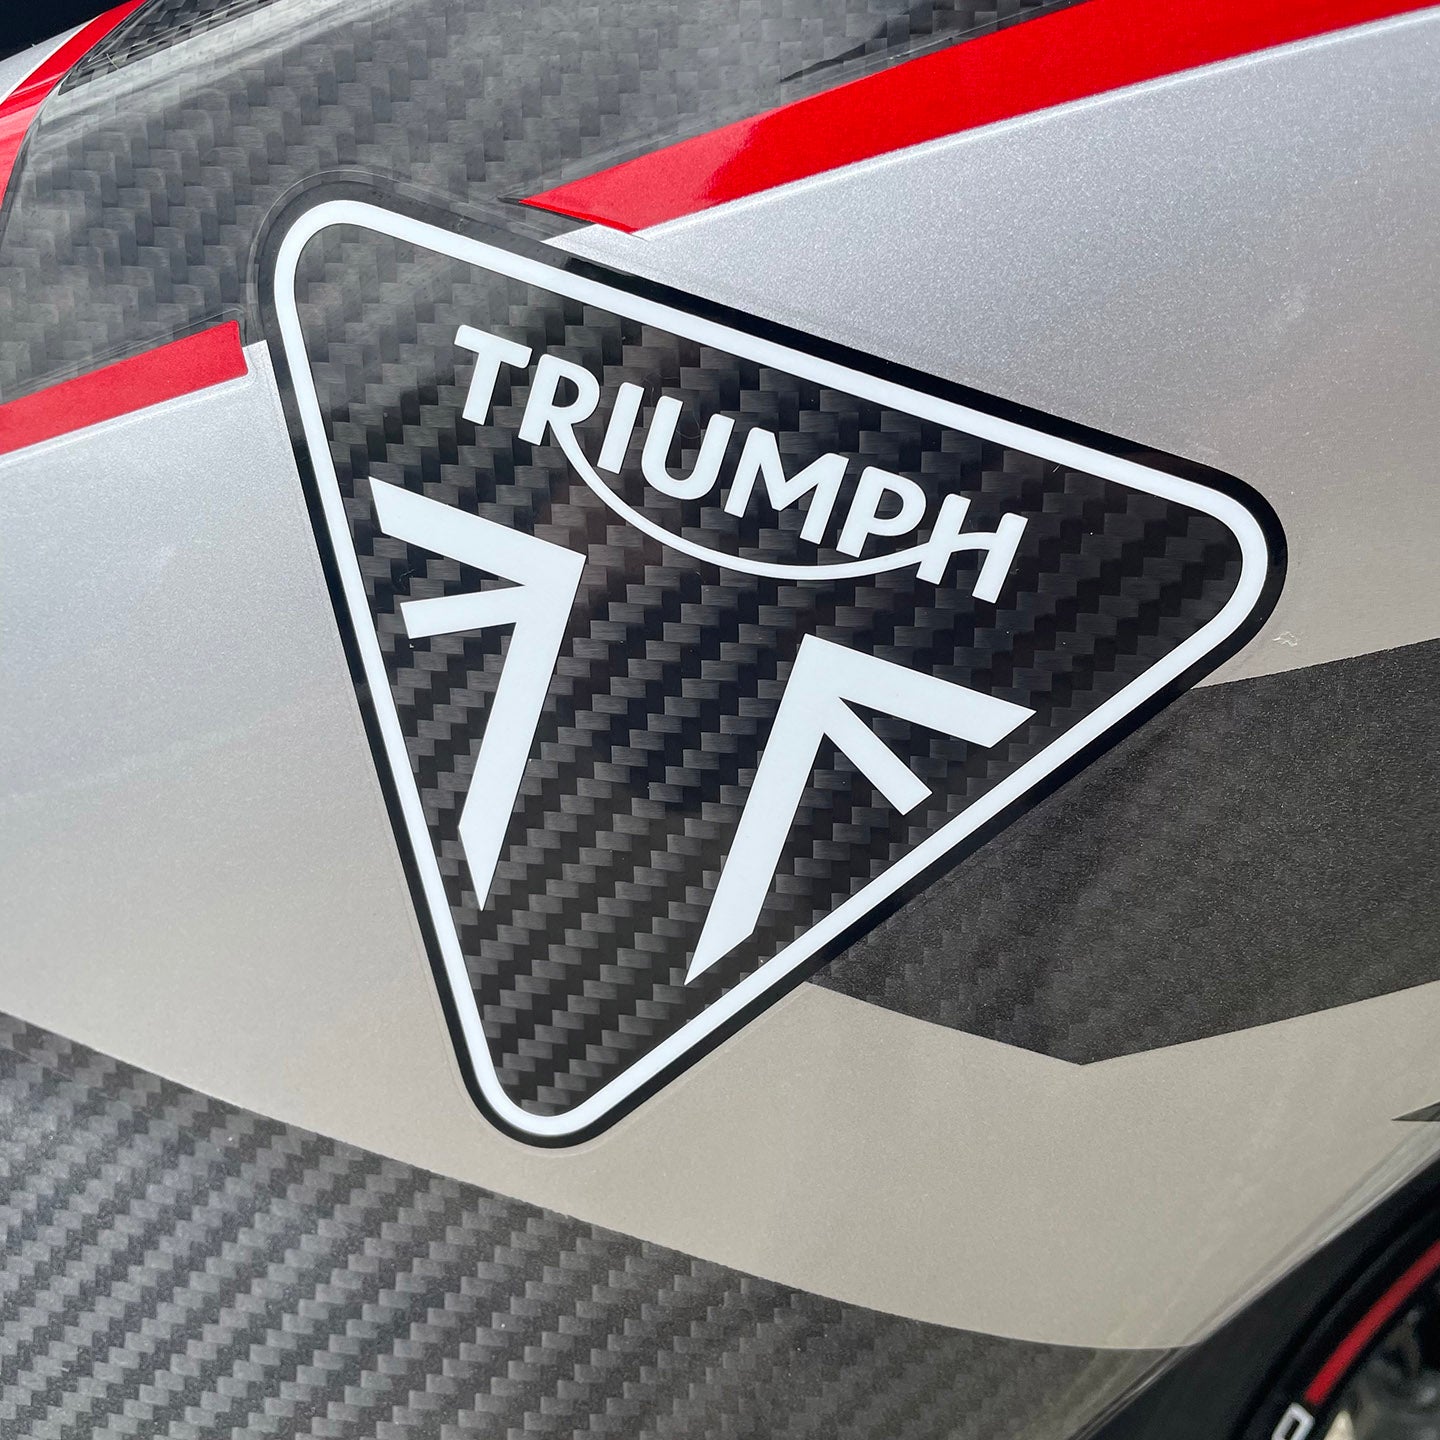 2020 Triumph Daytona 765 Moto 2 Limited Edition #433/765 (1,605 Miles)